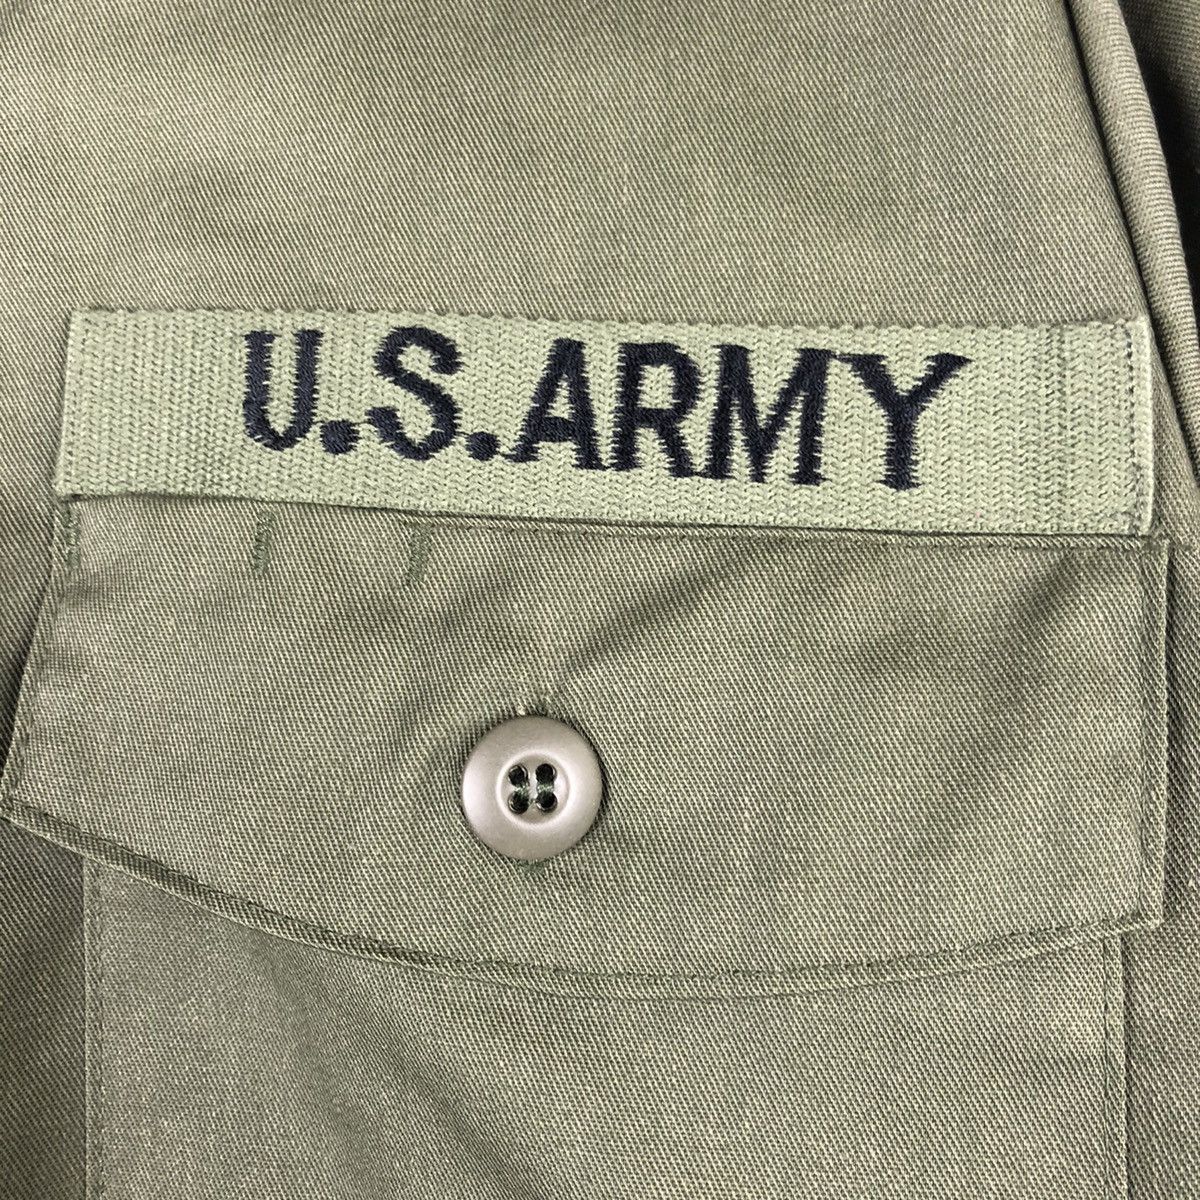 Vintage Vintage John Lennon Replica Army Jacket Size US M / EU 48-50 / 2 - 5 Thumbnail